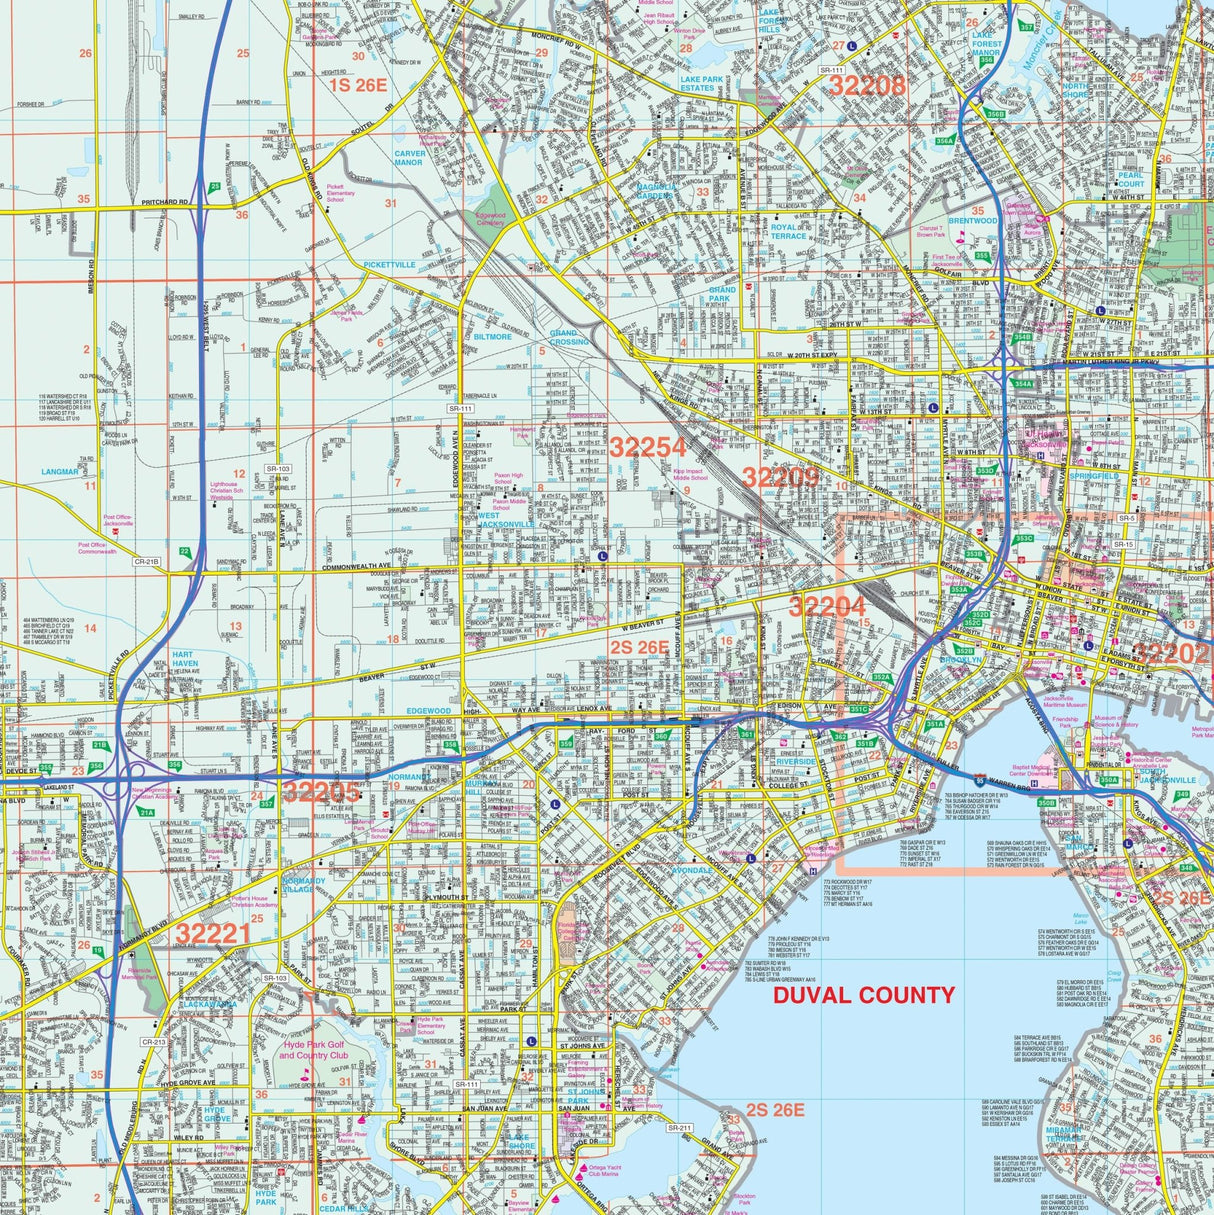 Jacksonville, FL Wall Map - KA-C-FL-JACKSONVILLE-PAPER - Ultimate Globes